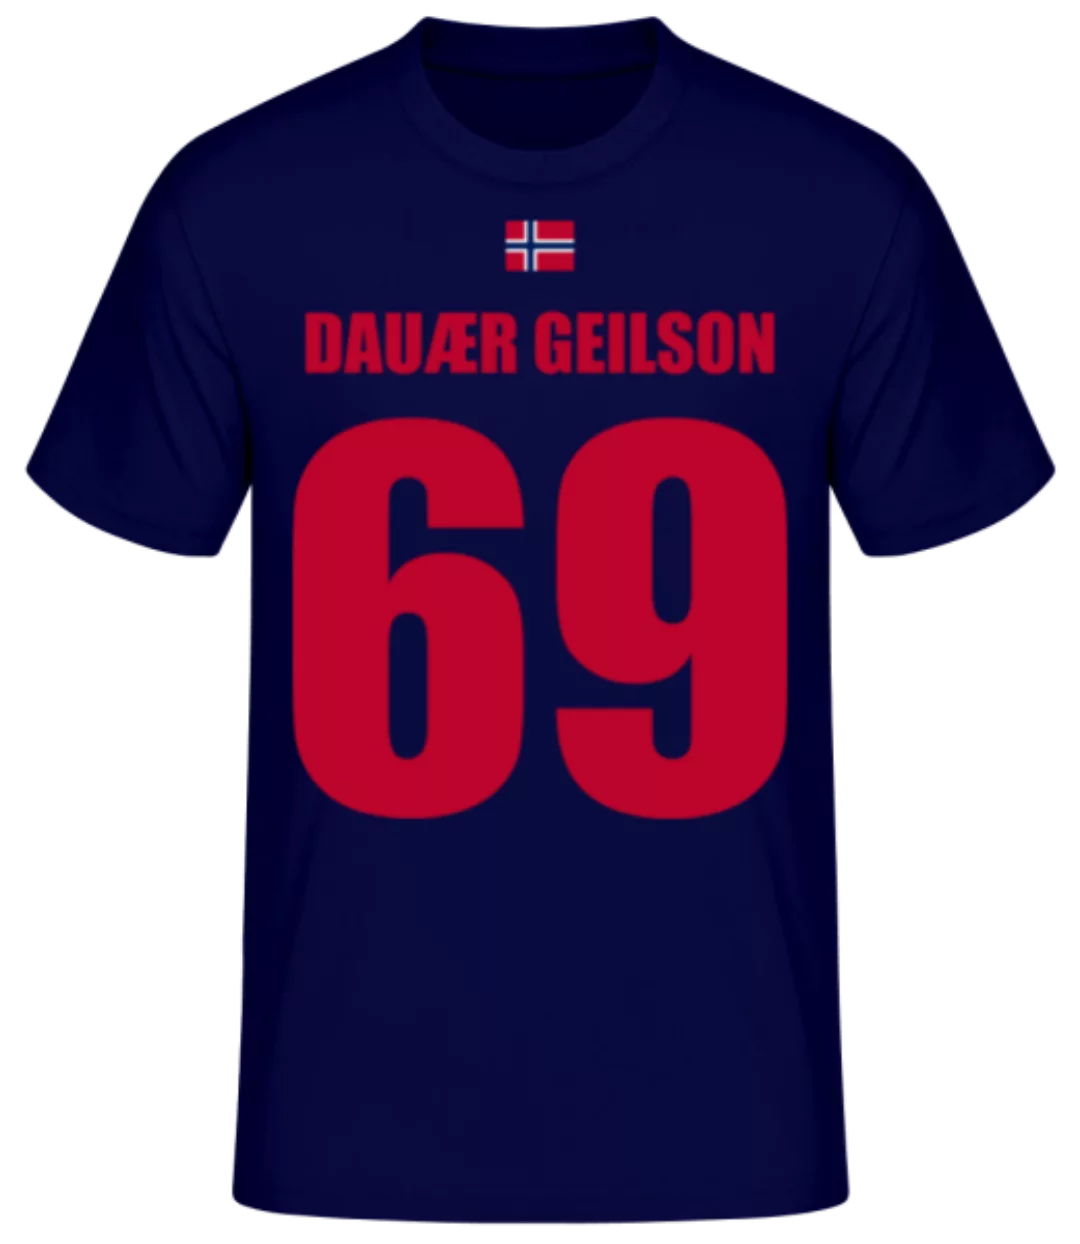 Norwegen Fußball Trikot Dauær Geilson · Männer Basic T-Shirt günstig online kaufen